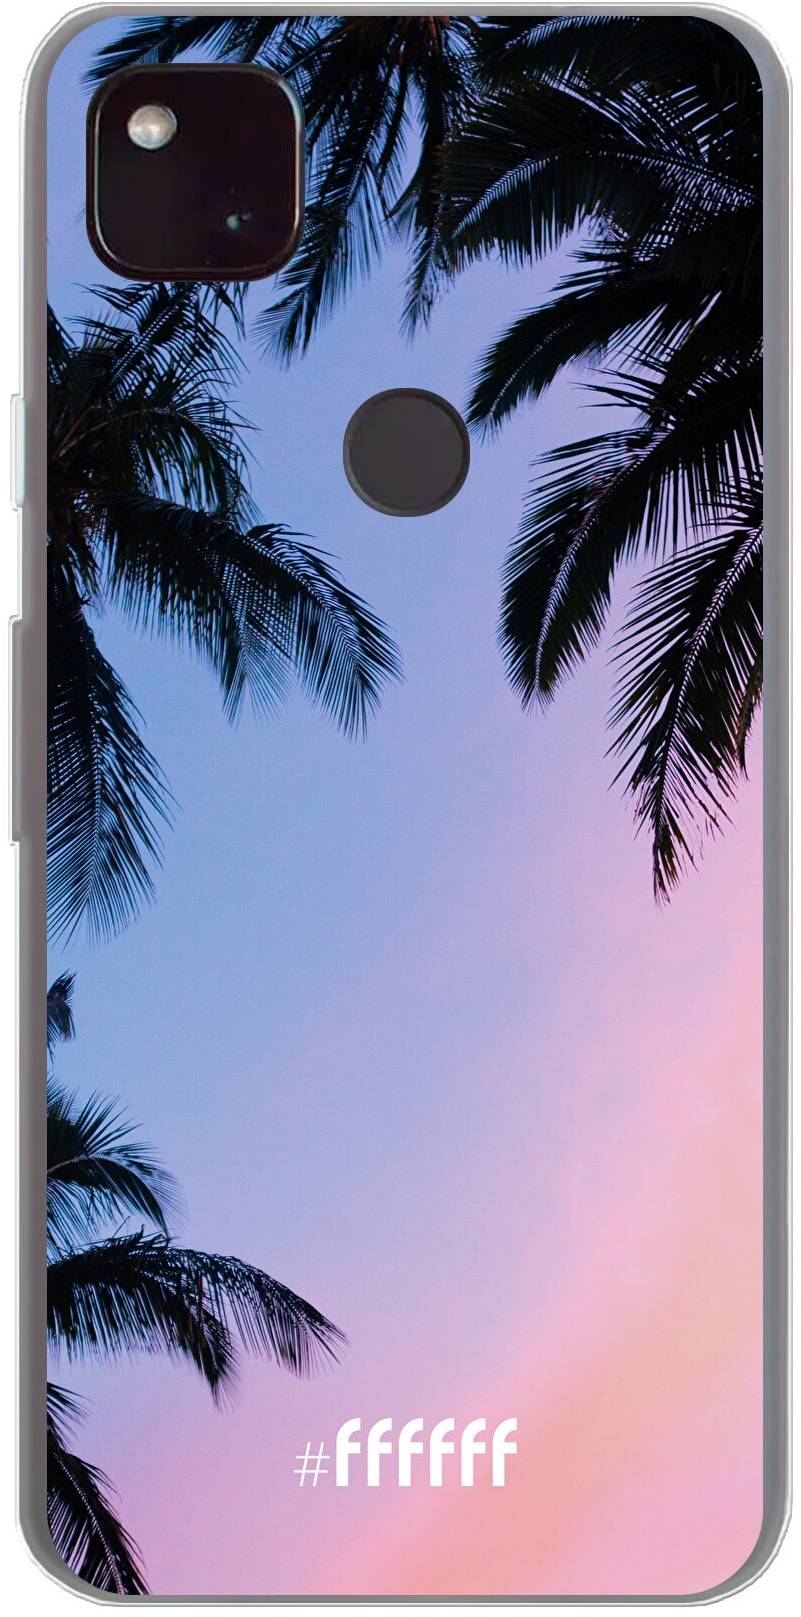 Sunset Palms Pixel 4a 5G